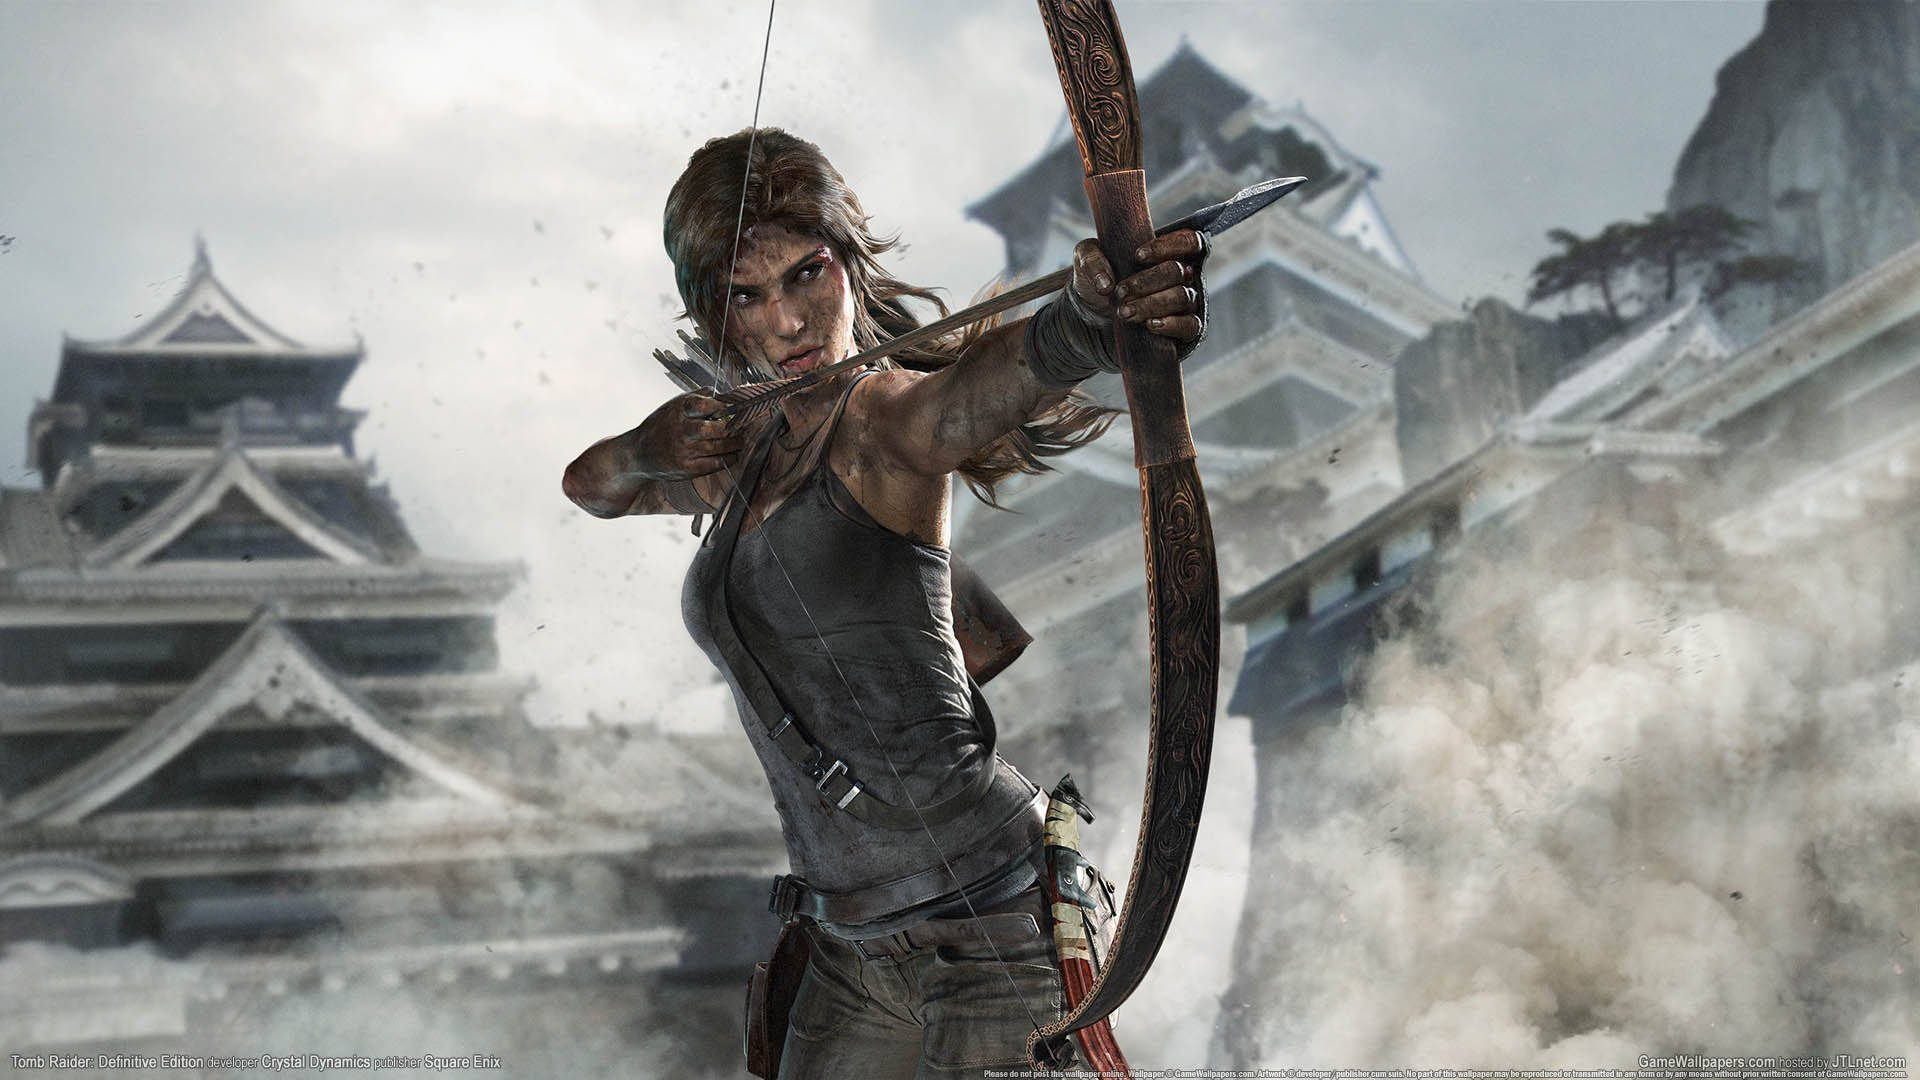 Laracroft In Aktion Im Tomb Raider Spiel Wallpaper